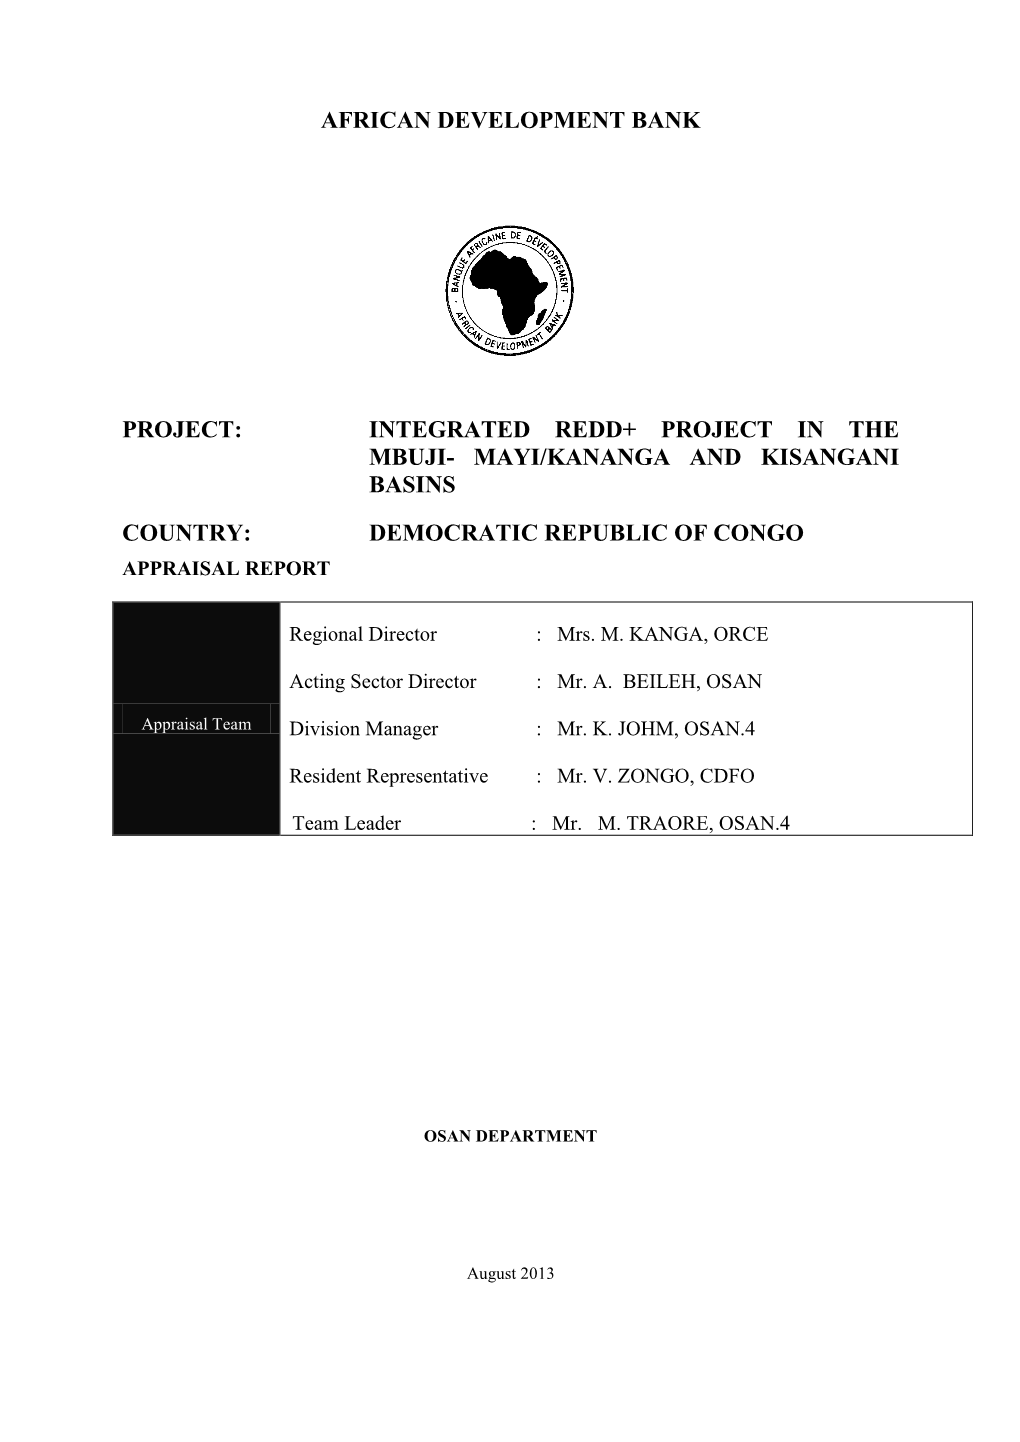 Integrated REDD+ Project in the Mbuji-Mayi-Kananga and Kisangani Basins